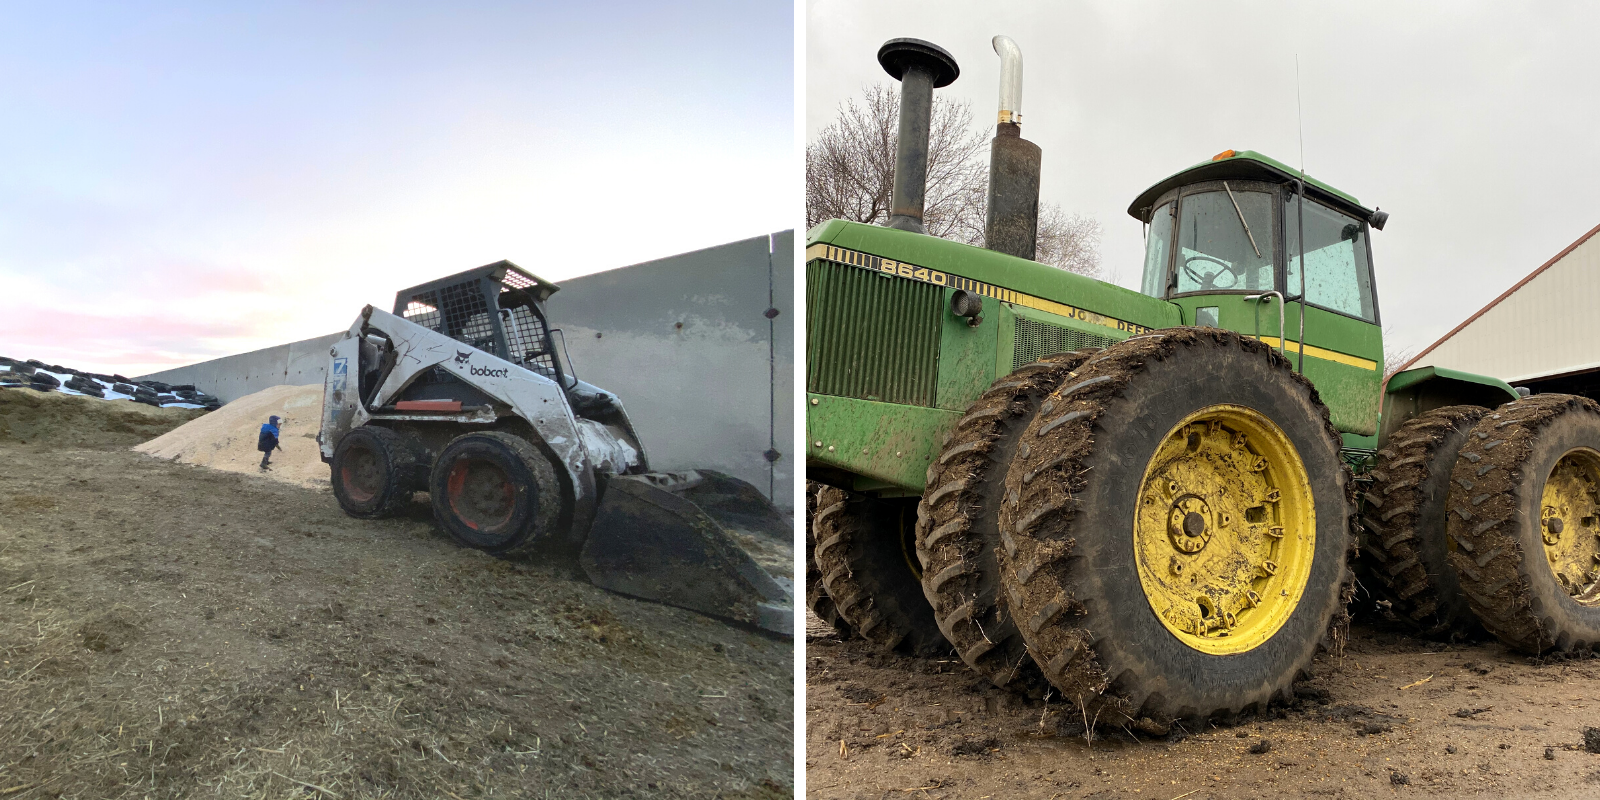 Farm equipment - skid steer & John Deere tractor